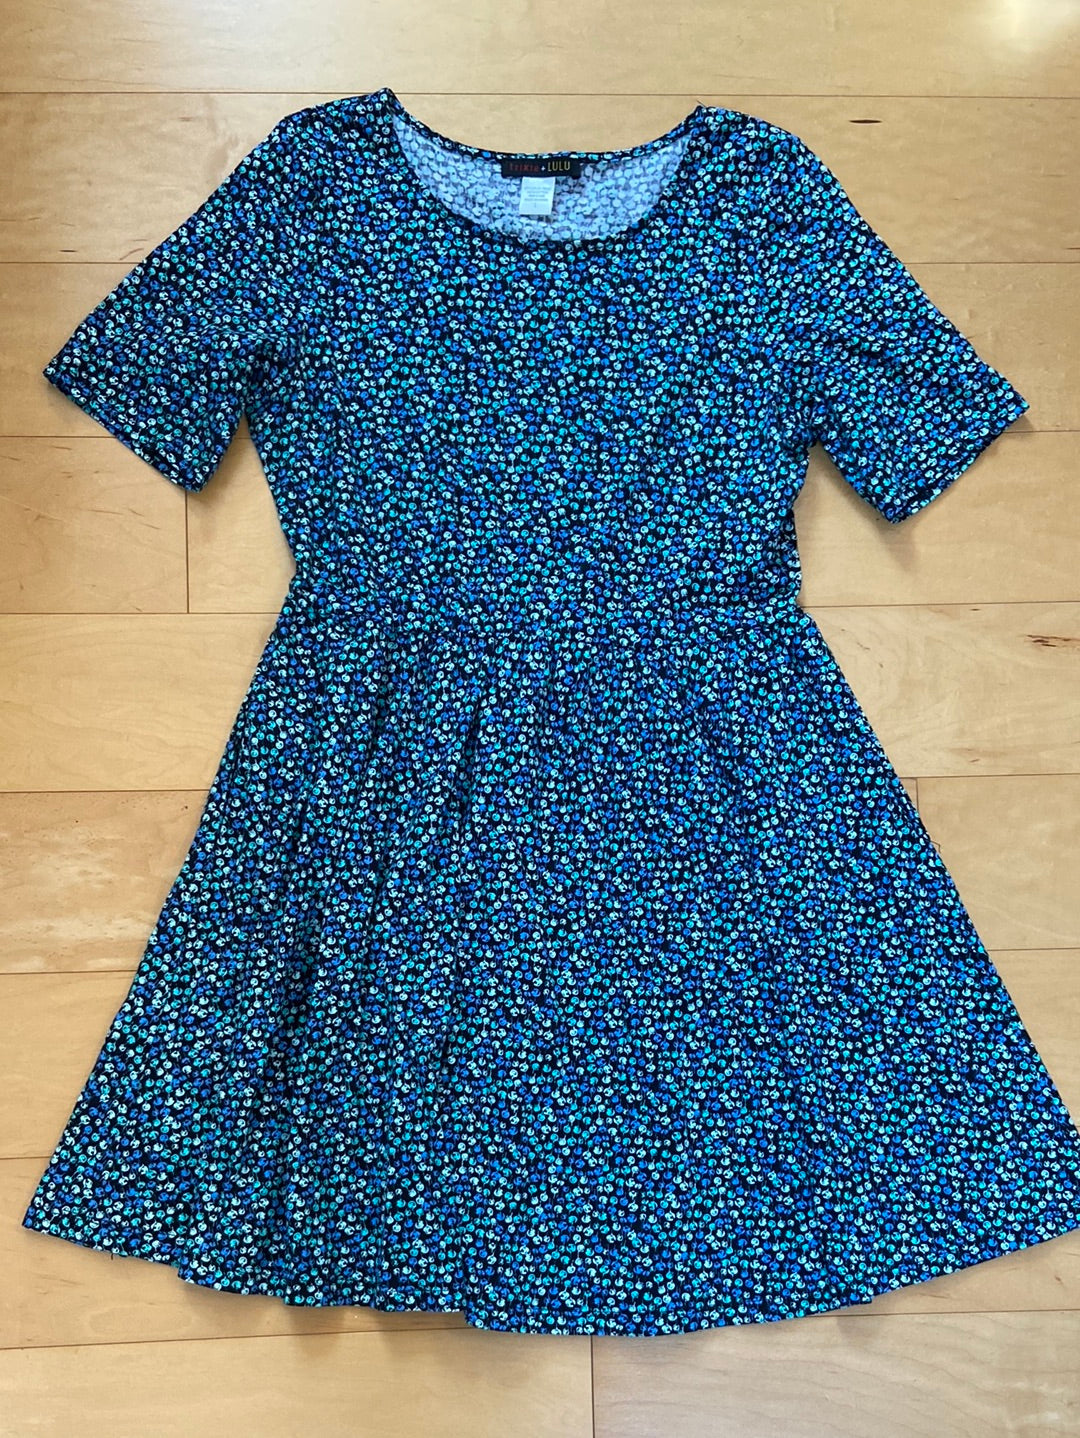 BLUE BASIC Trixie and Lulu Blue Print Dress Size L